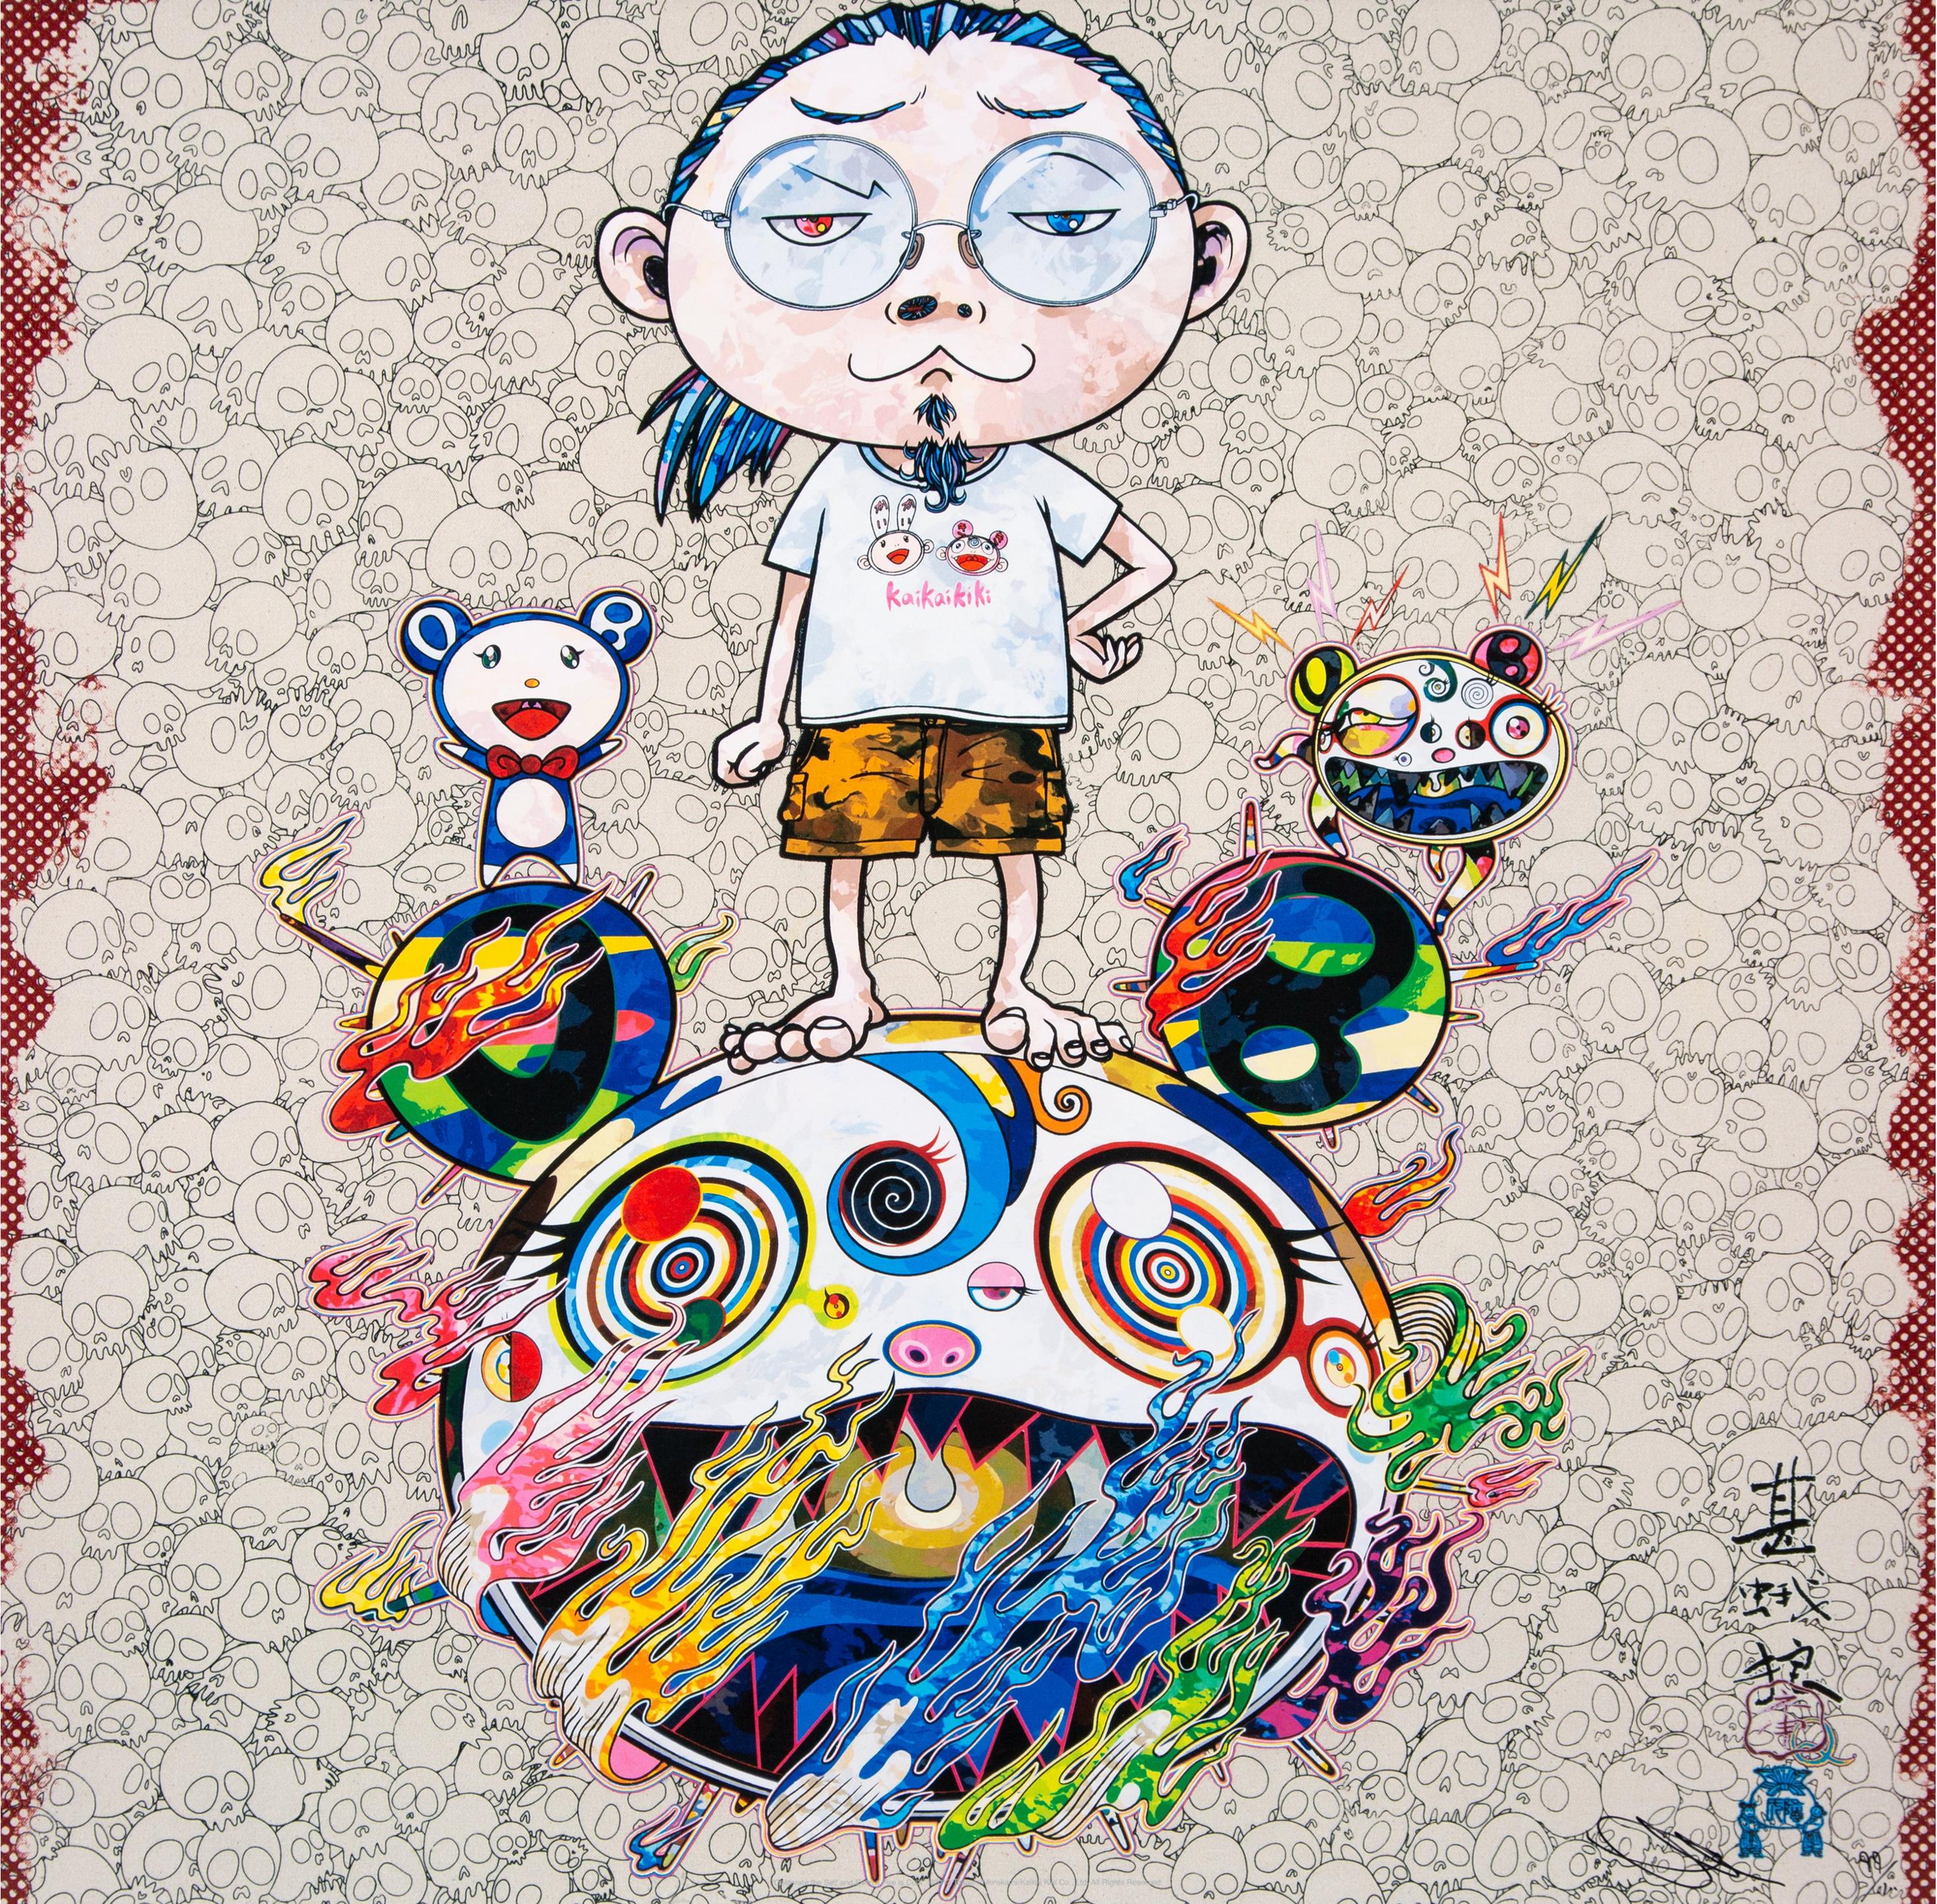 Takashi Murakami - TAKASHI MURAKAMI: With eyes on Hand signed and  numbered. Superflat, Pop Art